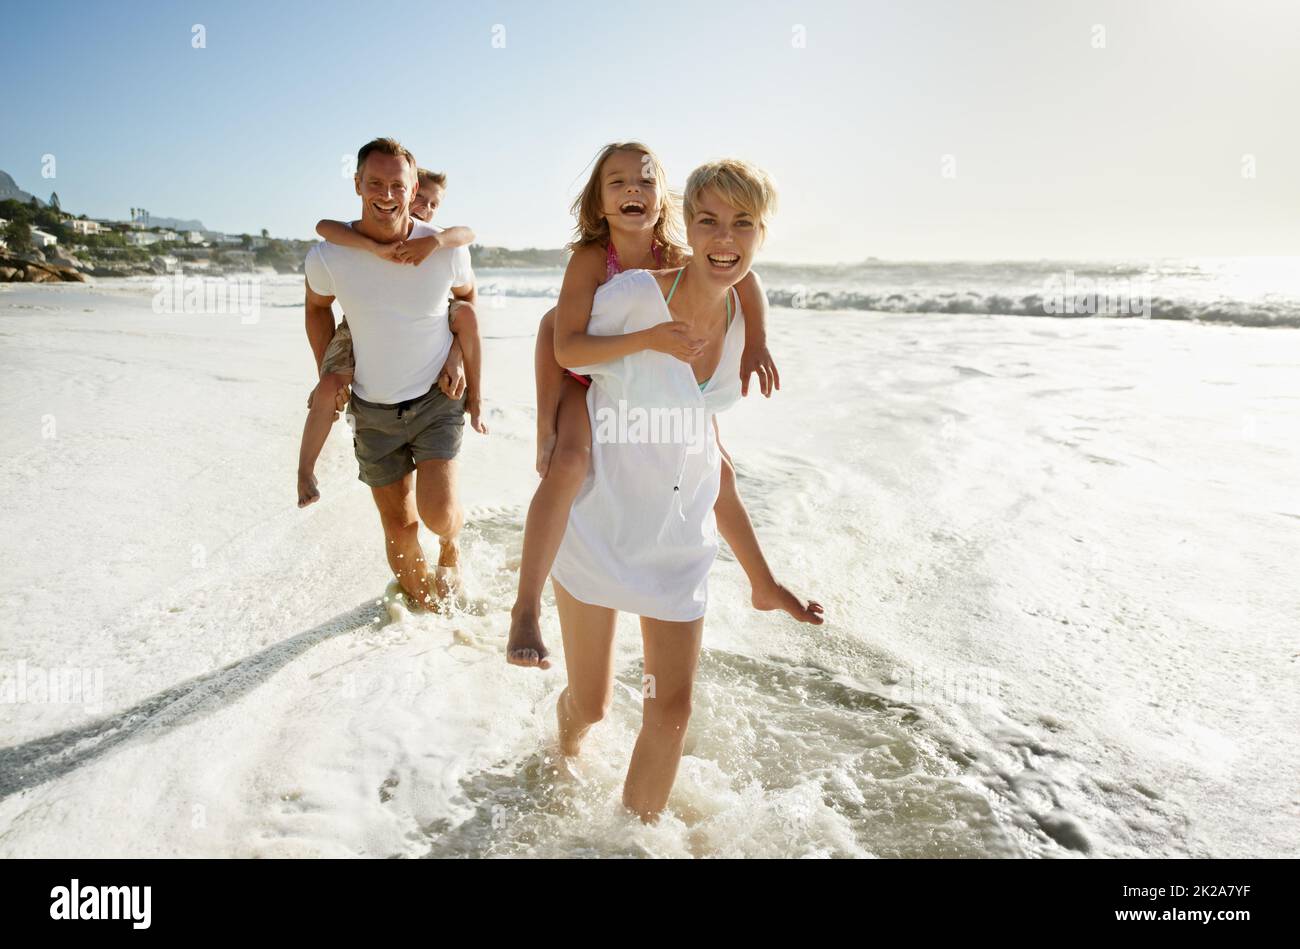 Family beach fun. A family having fun at the beach. Stock Photo